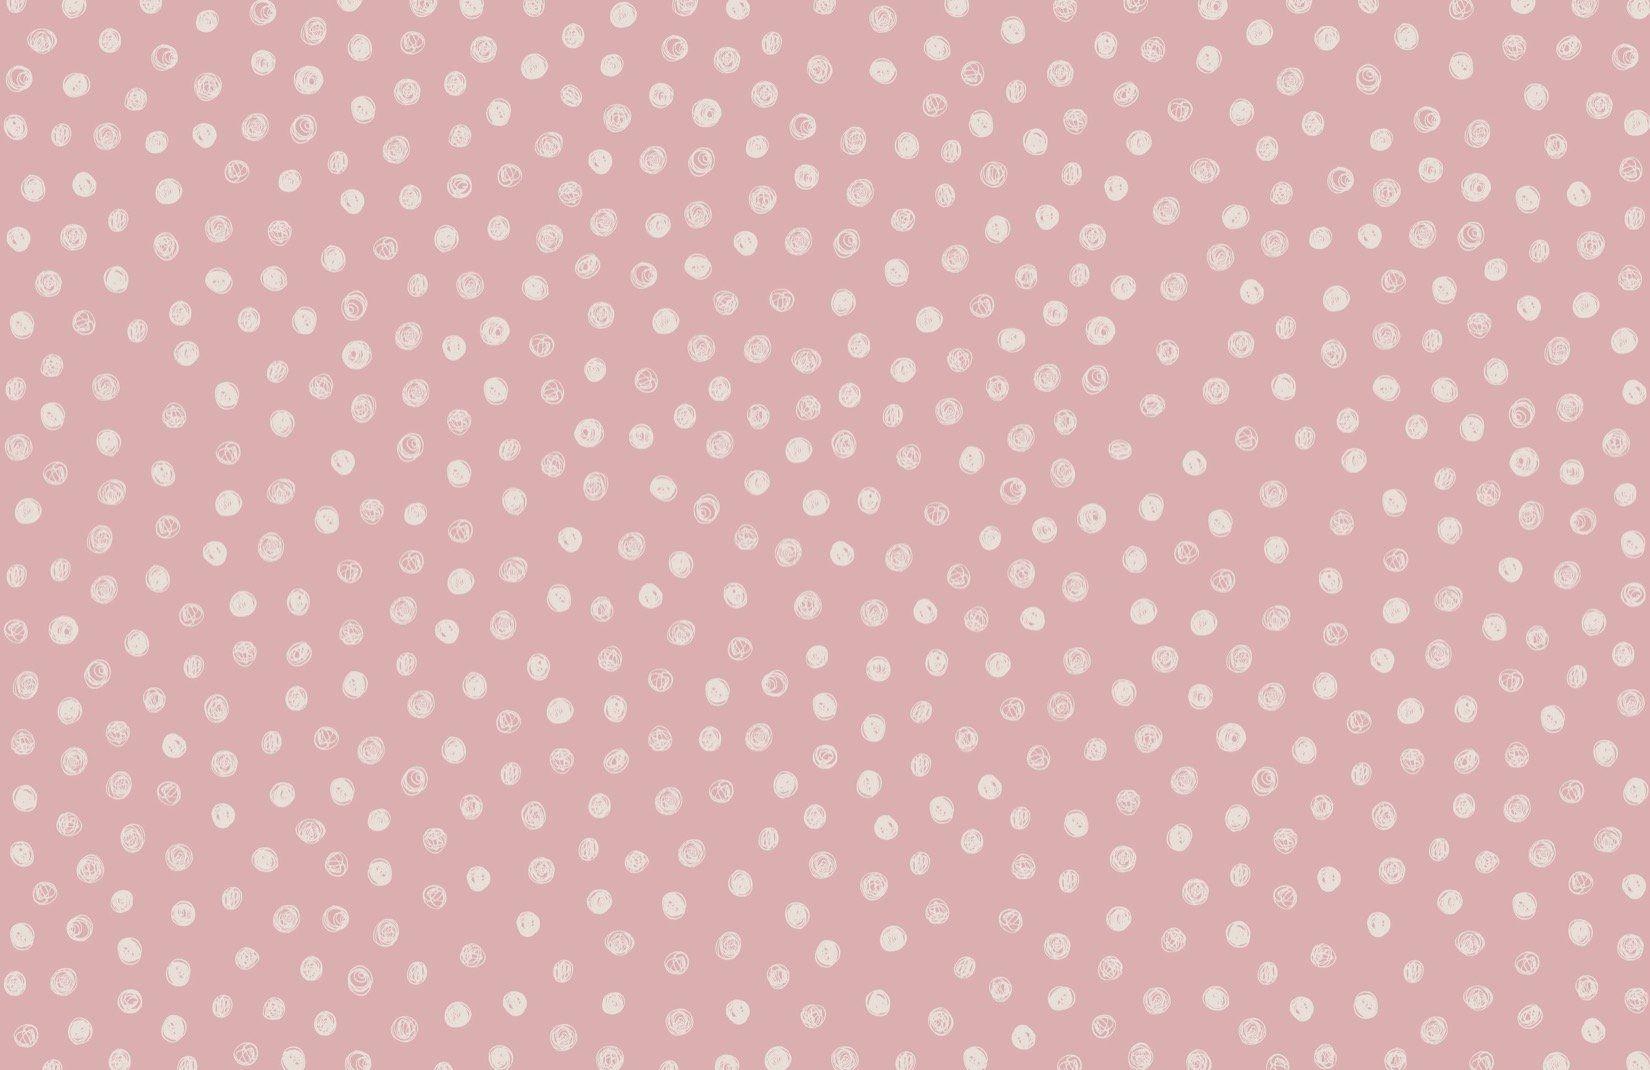 Light Pink and Dark Pink Polka Dot Nails - wide 3